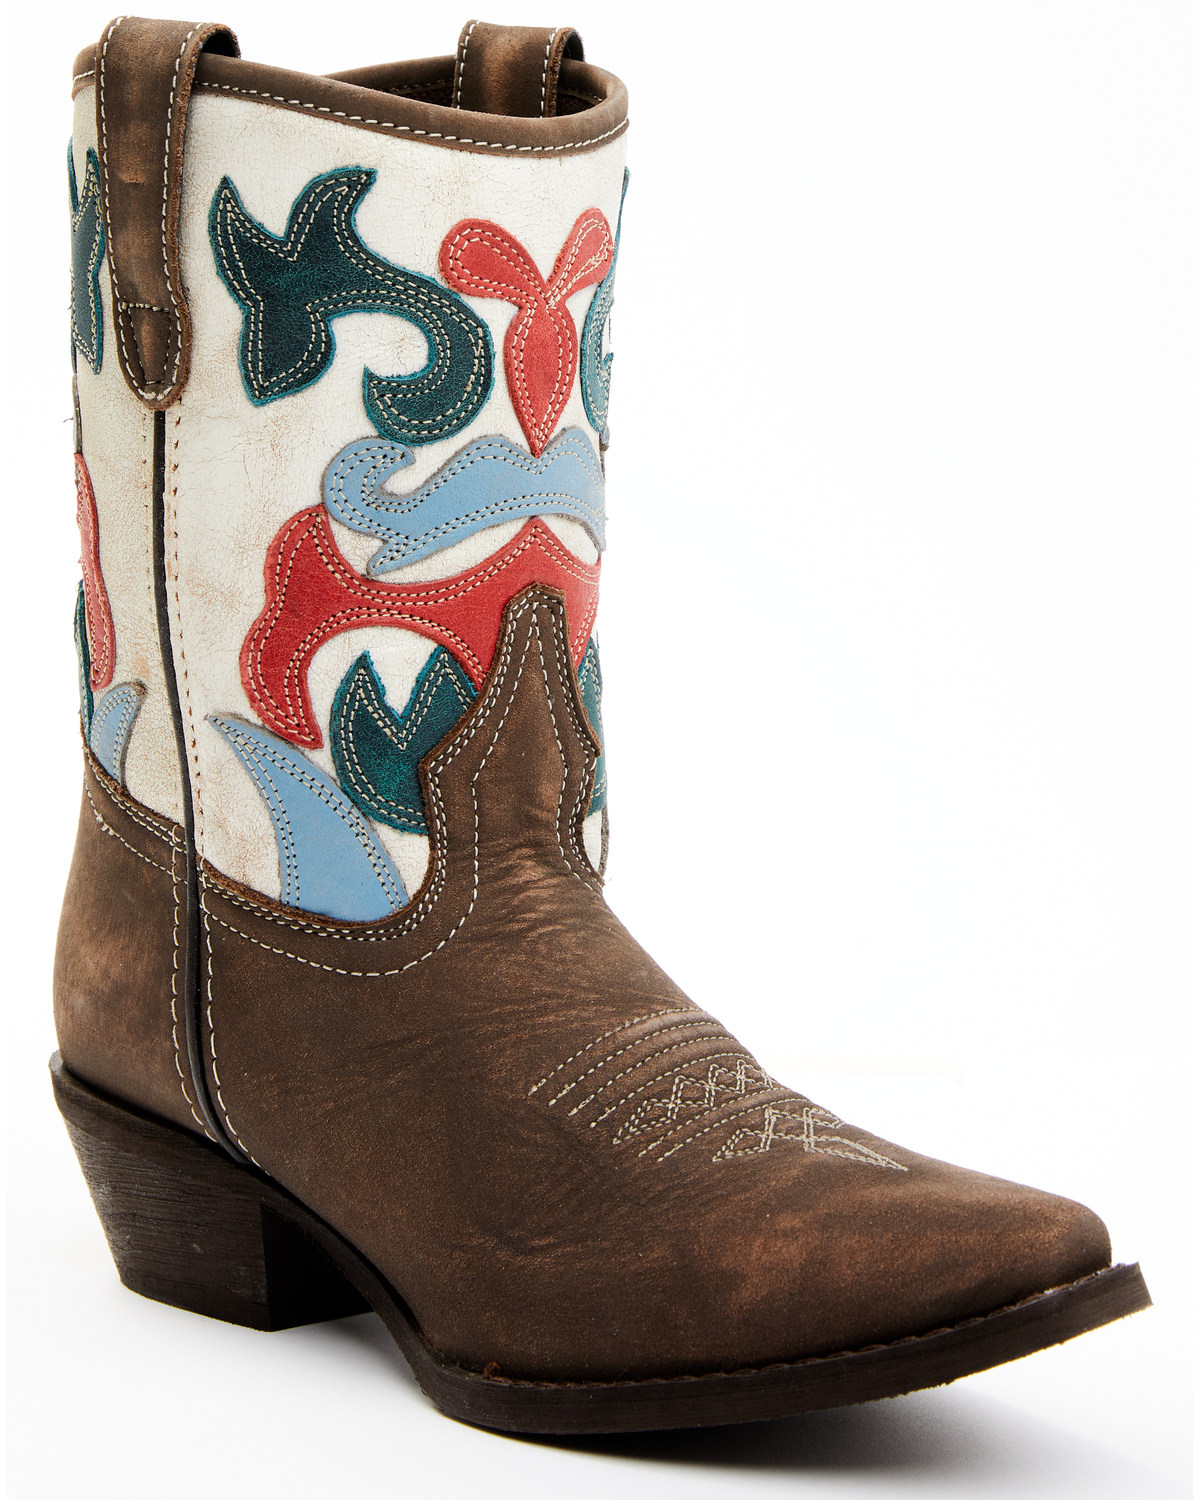 Laredo Women's Western Fashion Boots - Snip Toe